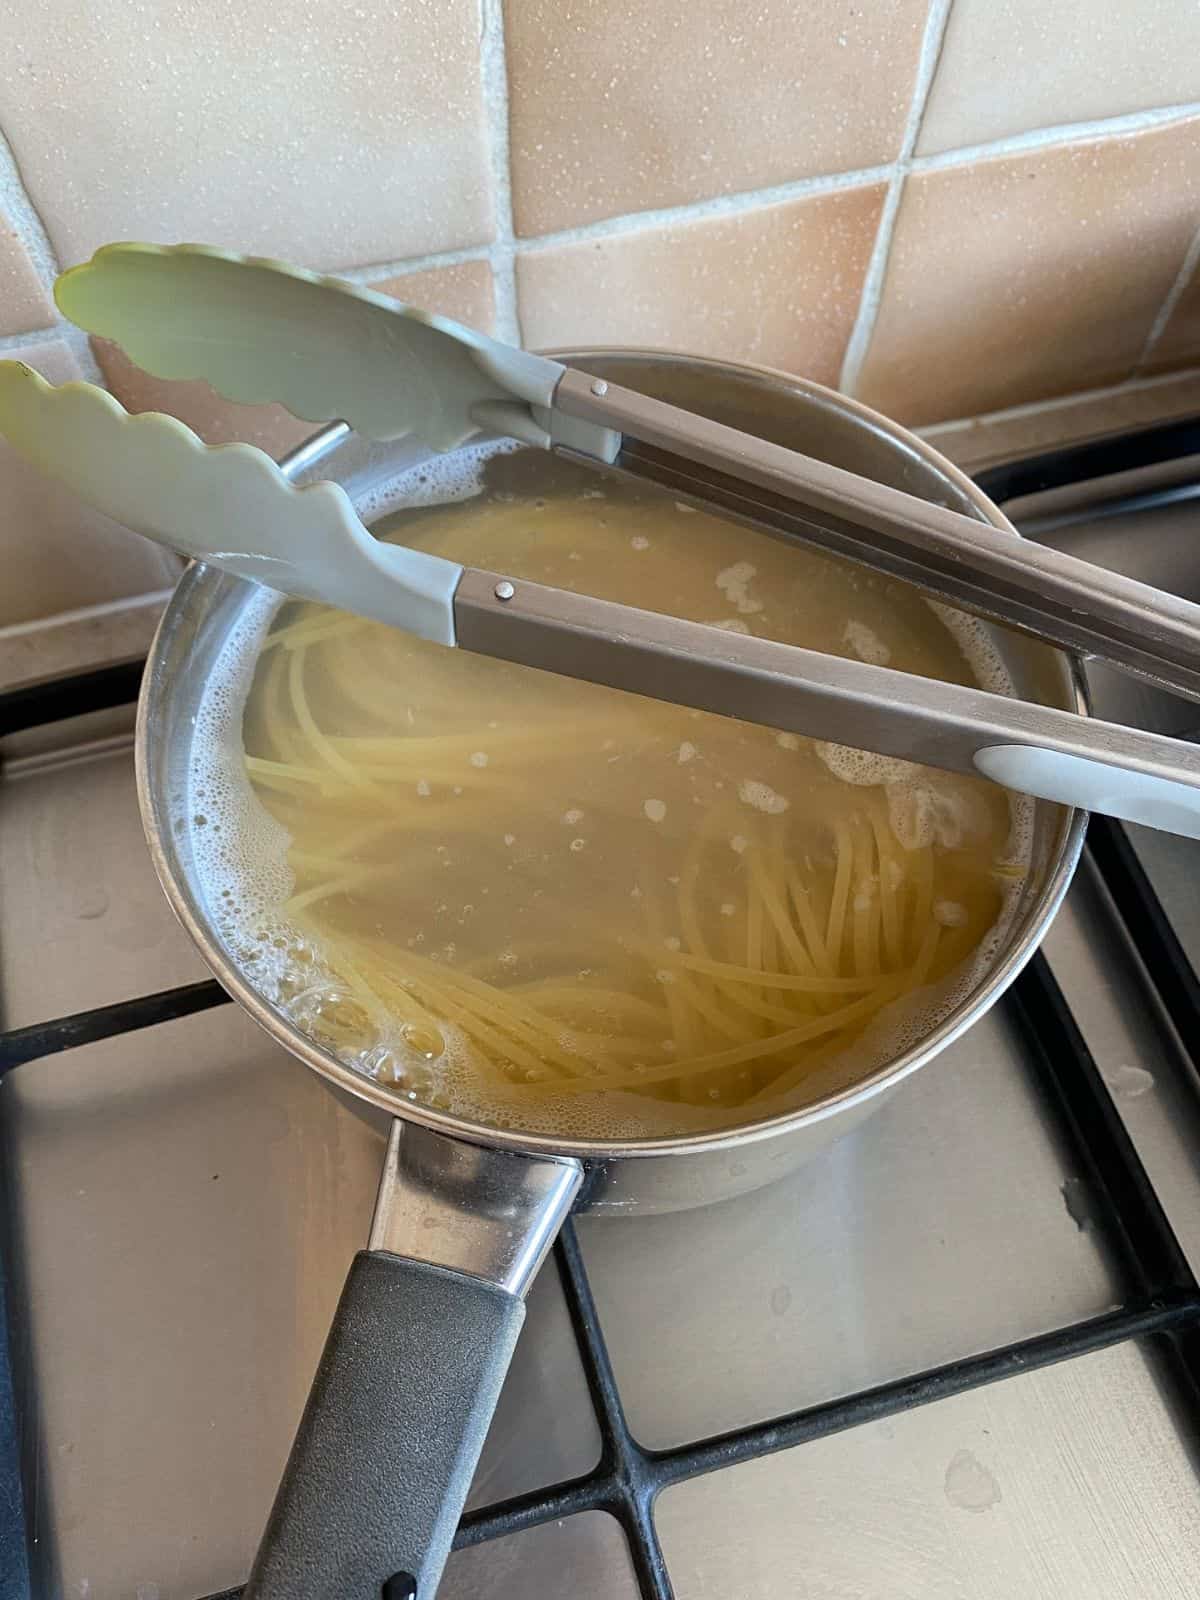 spaghetti cooking in a pan.